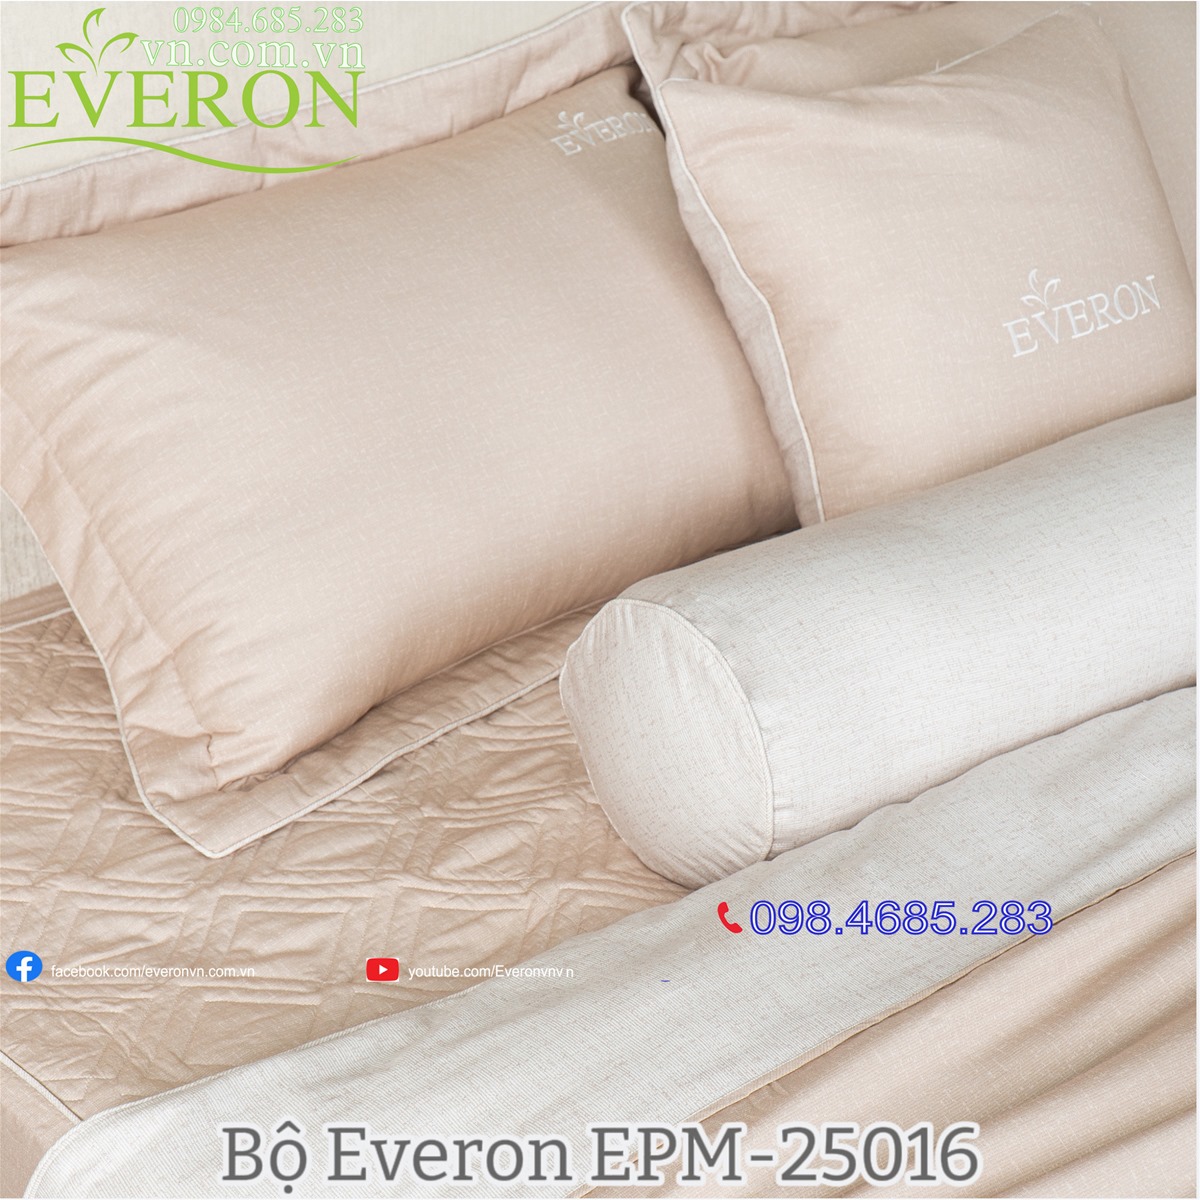 Bộ Chăn Ga Gối Everon EPM-25016